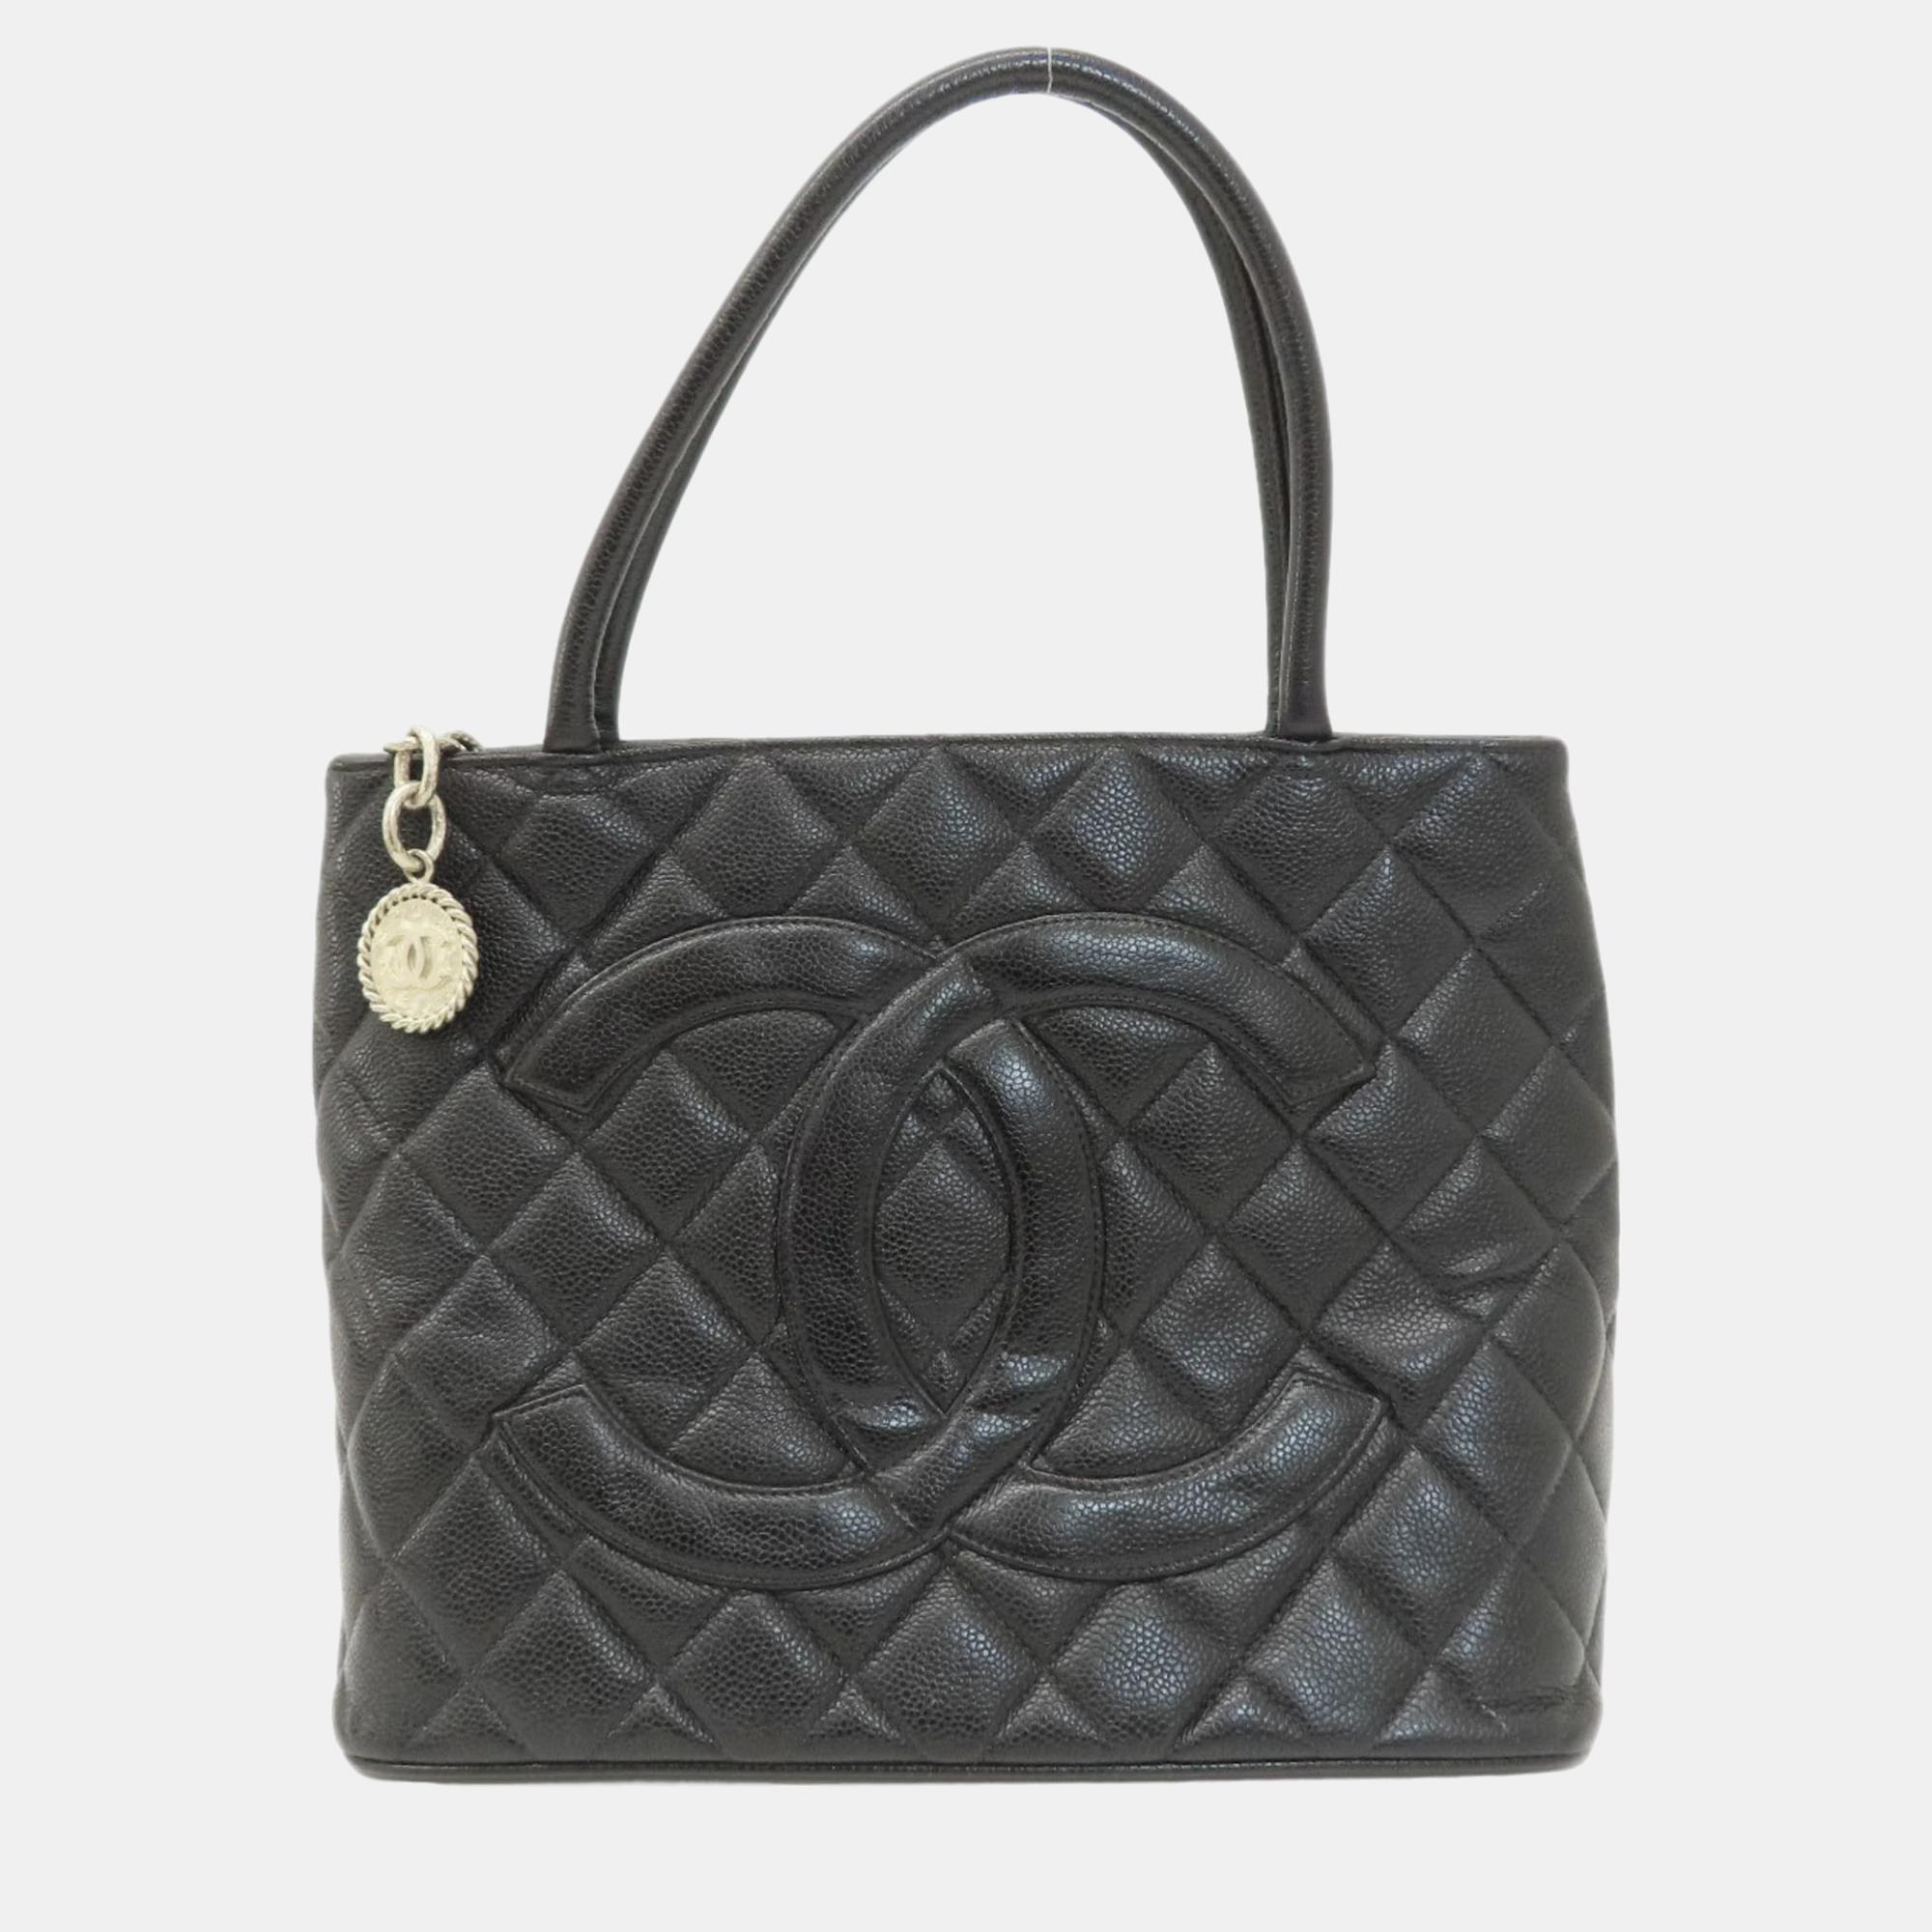 

Chanel Black Caviar Leather Medallion Tote Bag